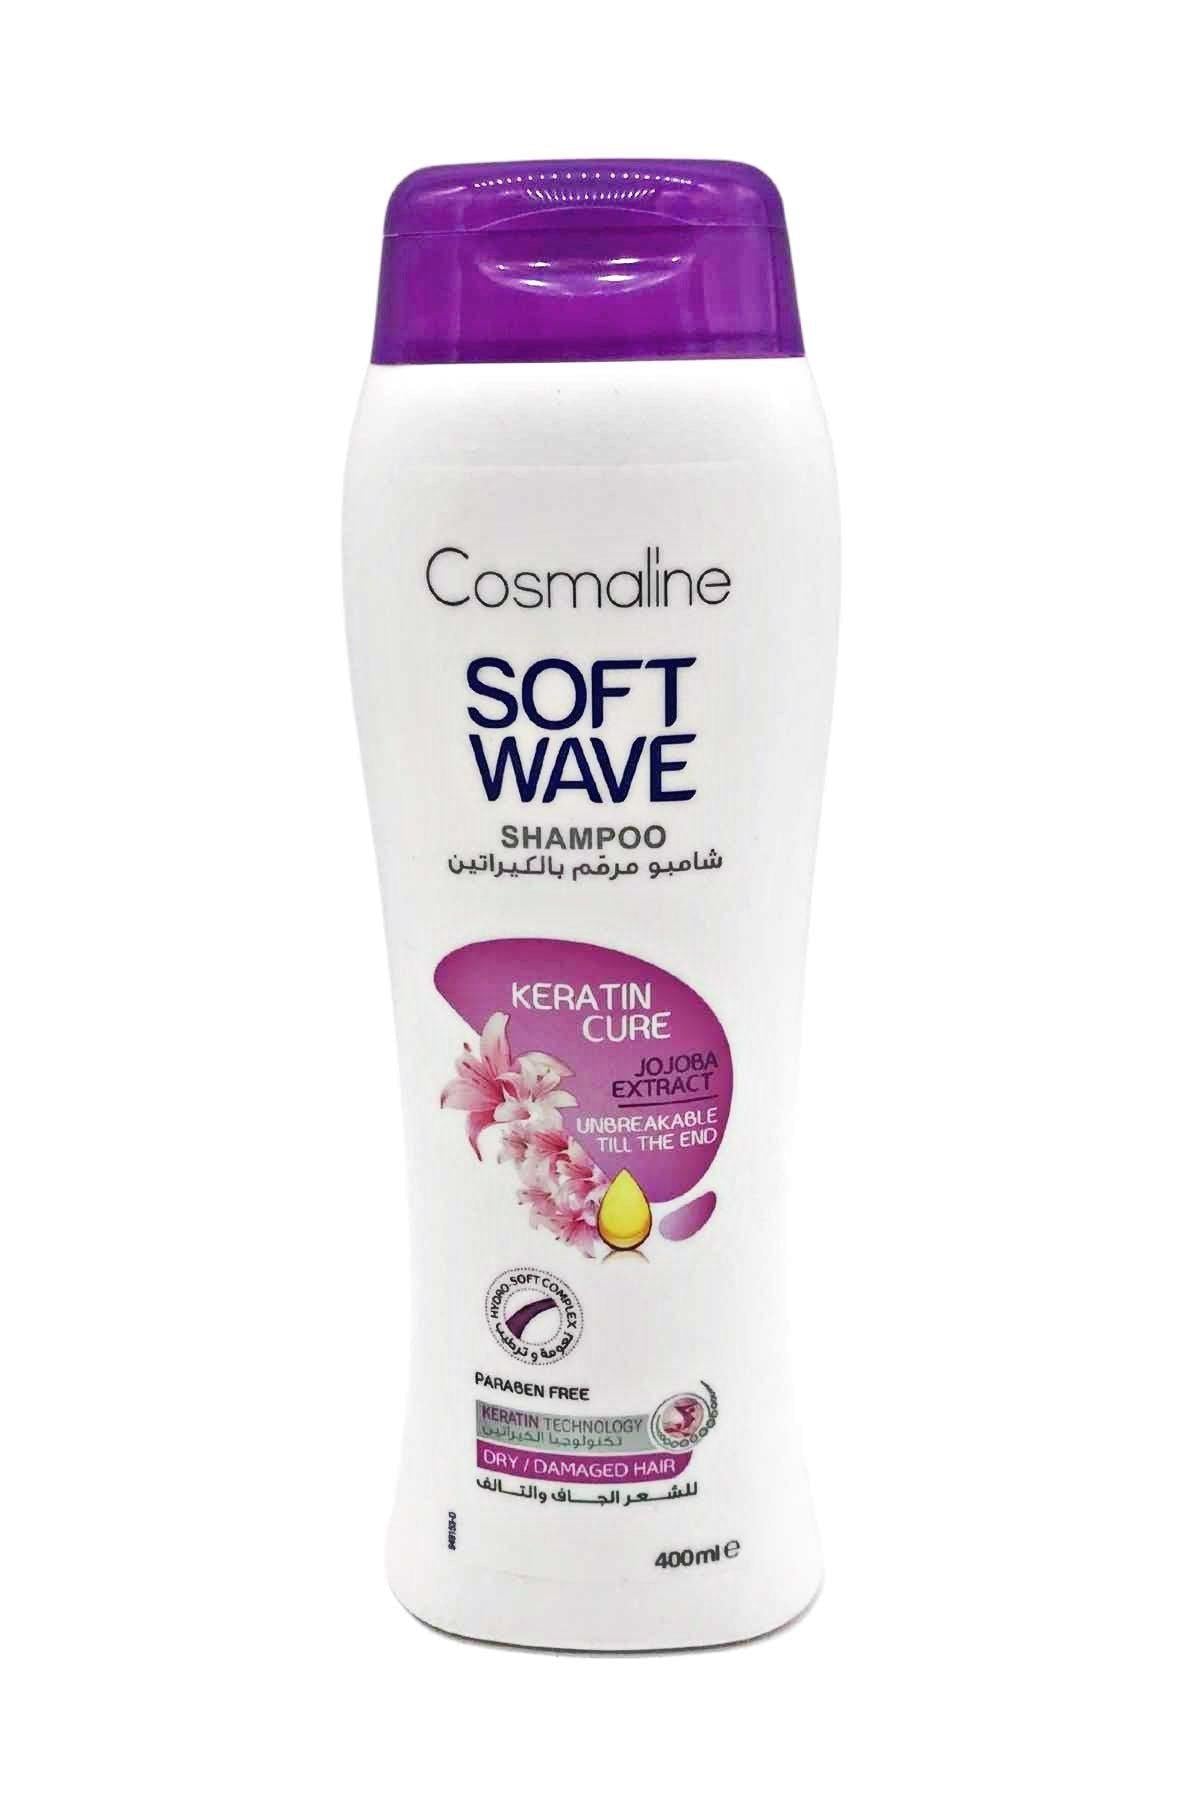 Cosmaline Soft Wave Shampoo Keratin Cure Dry Damage Hair 400ml